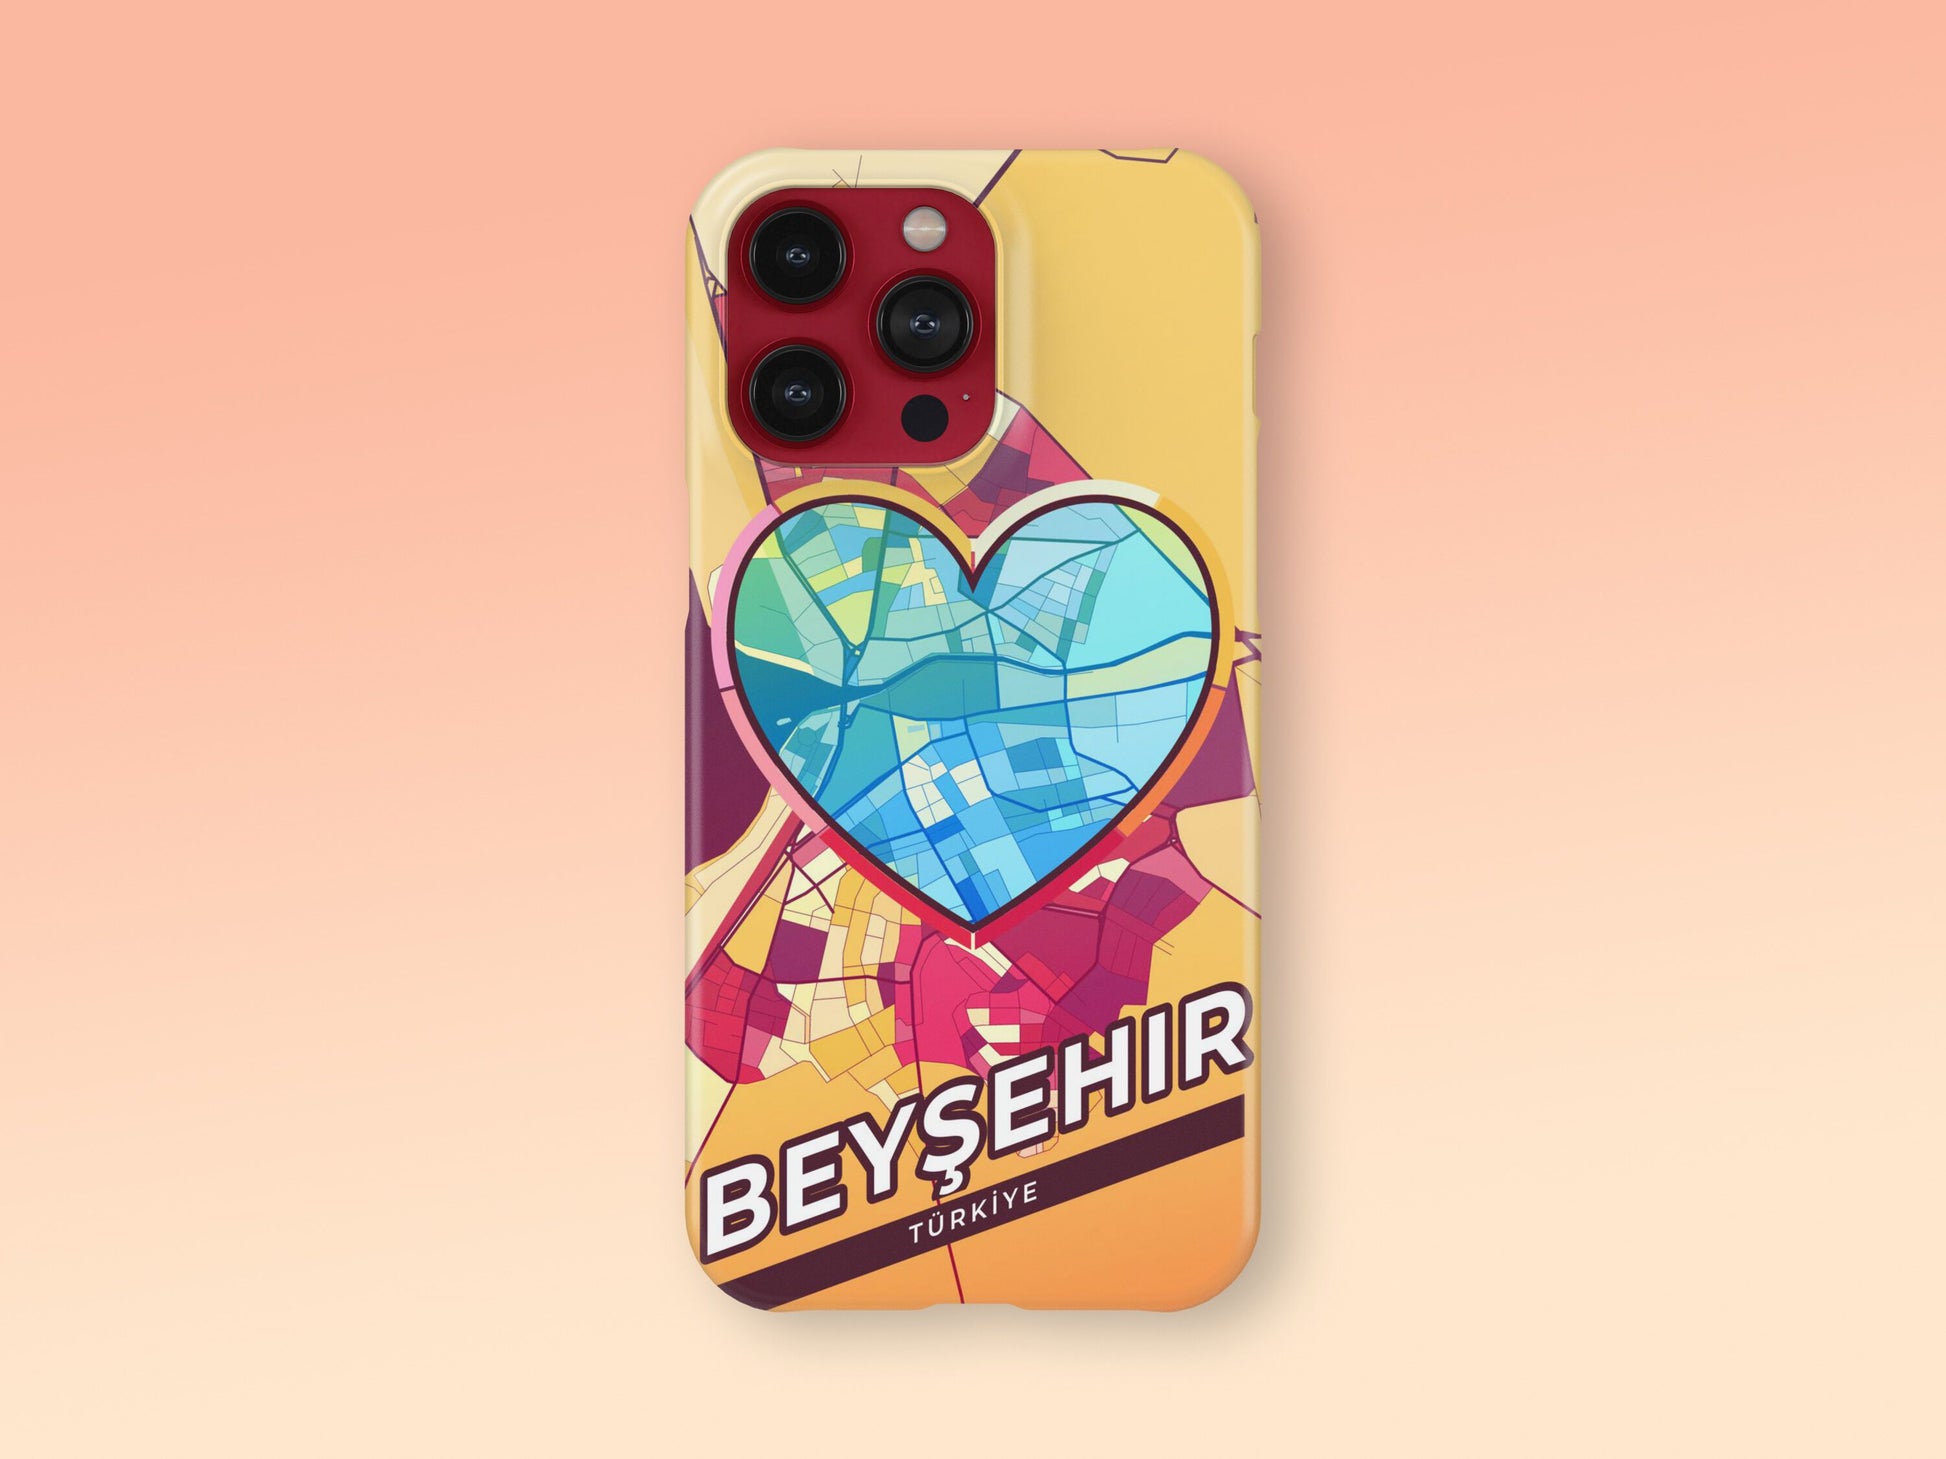 Beyşehir Turkey slim phone case with colorful icon. Birthday, wedding or housewarming gift. Couple match cases. 2